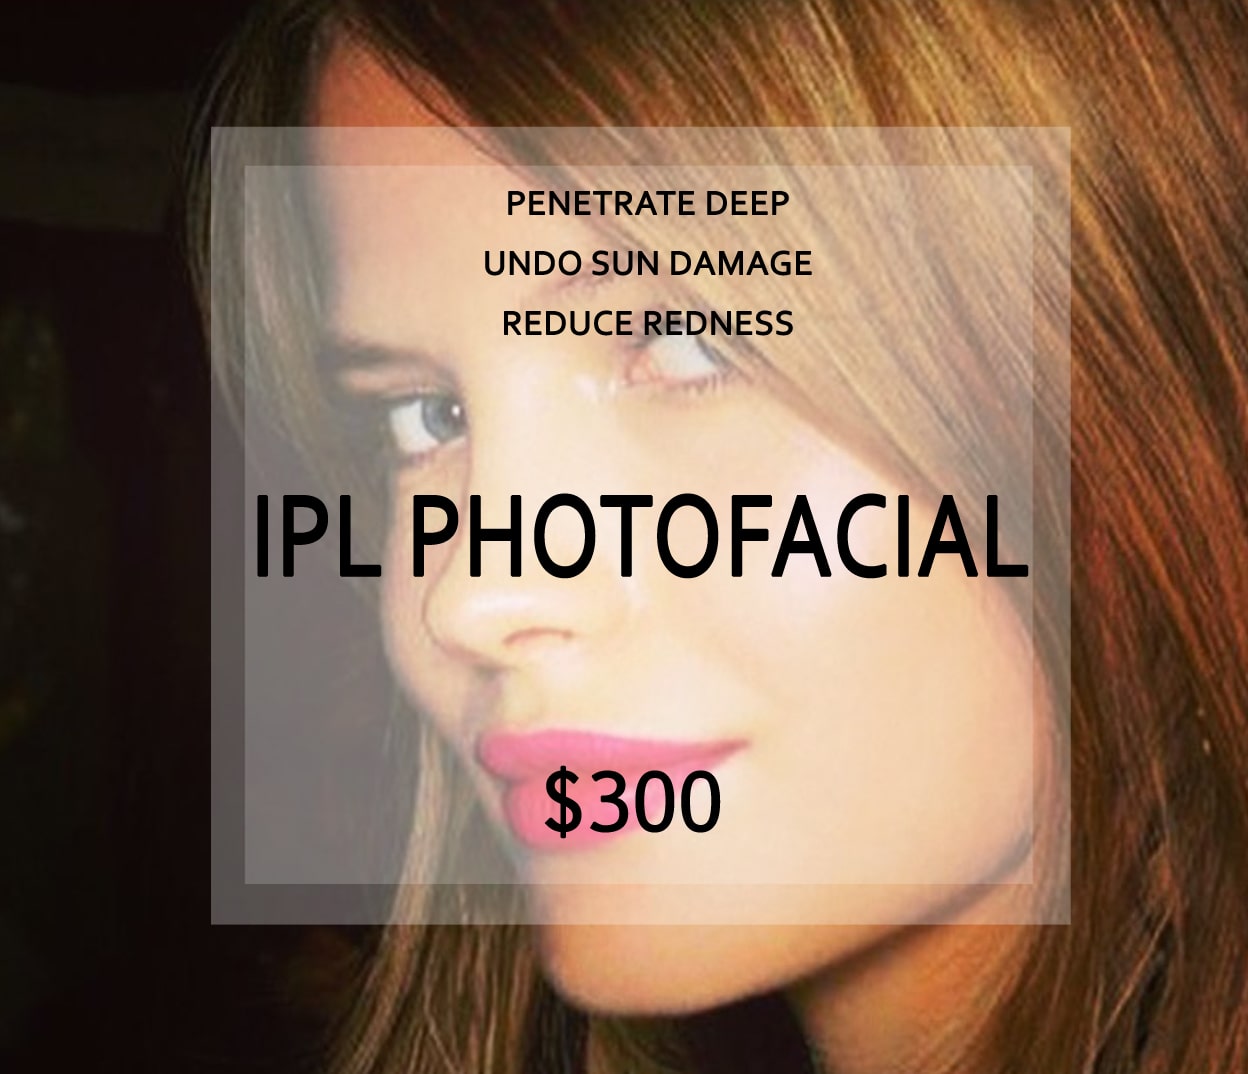 ipl photofacial ut beauty lab and laser